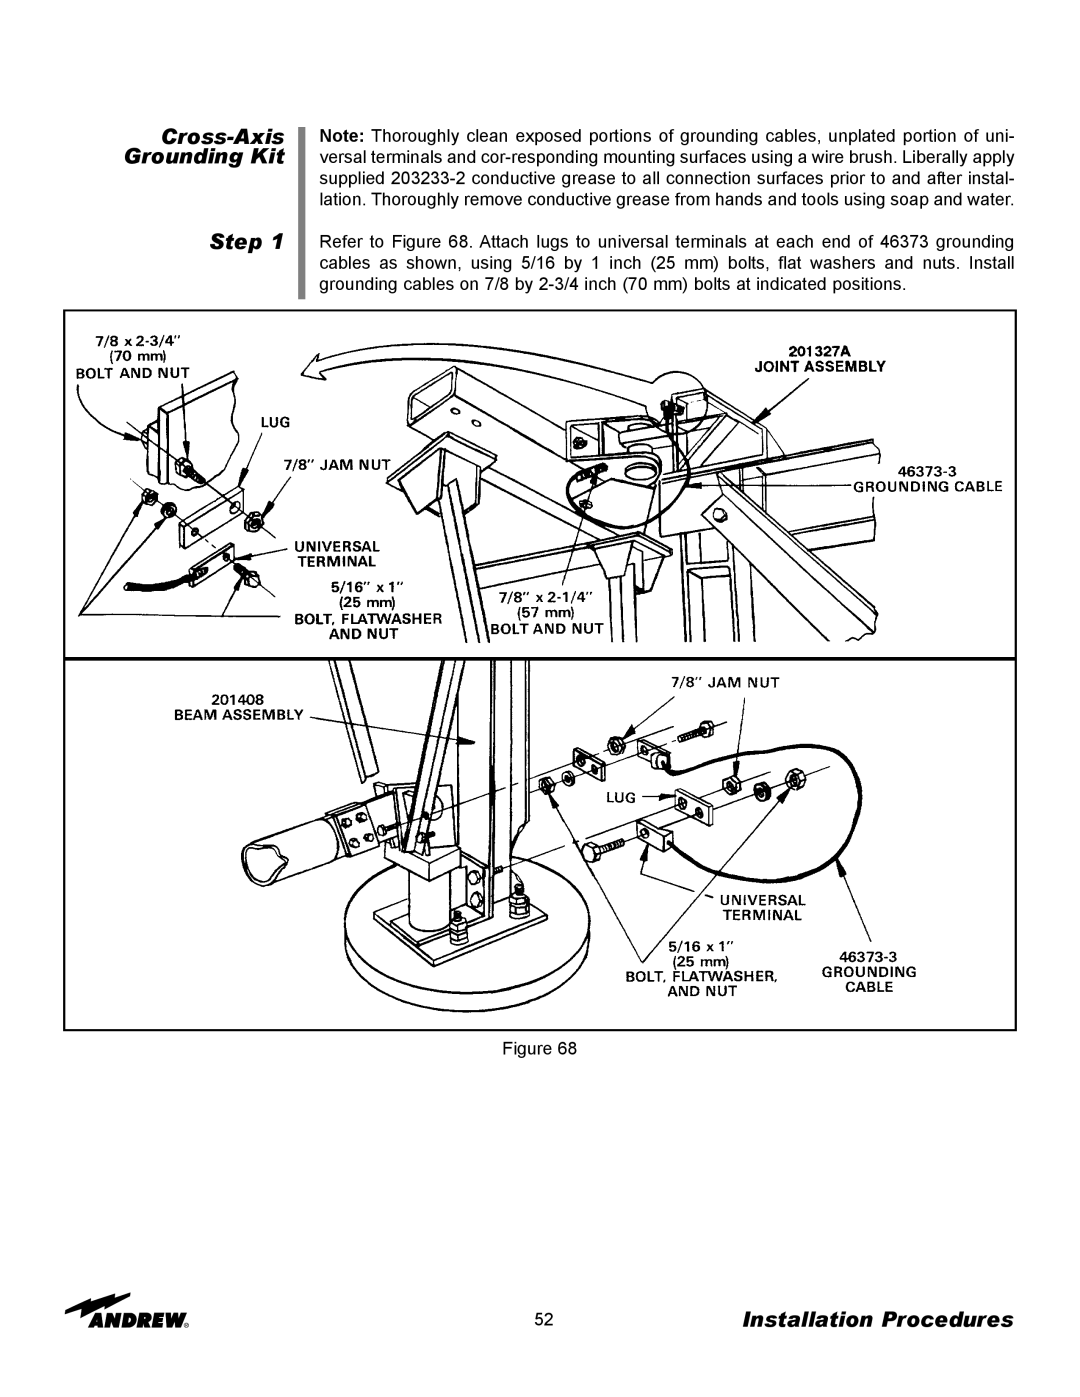 Andrew ES73 manual Cross-AxisGrounding Kit Step, Installation Procedures 